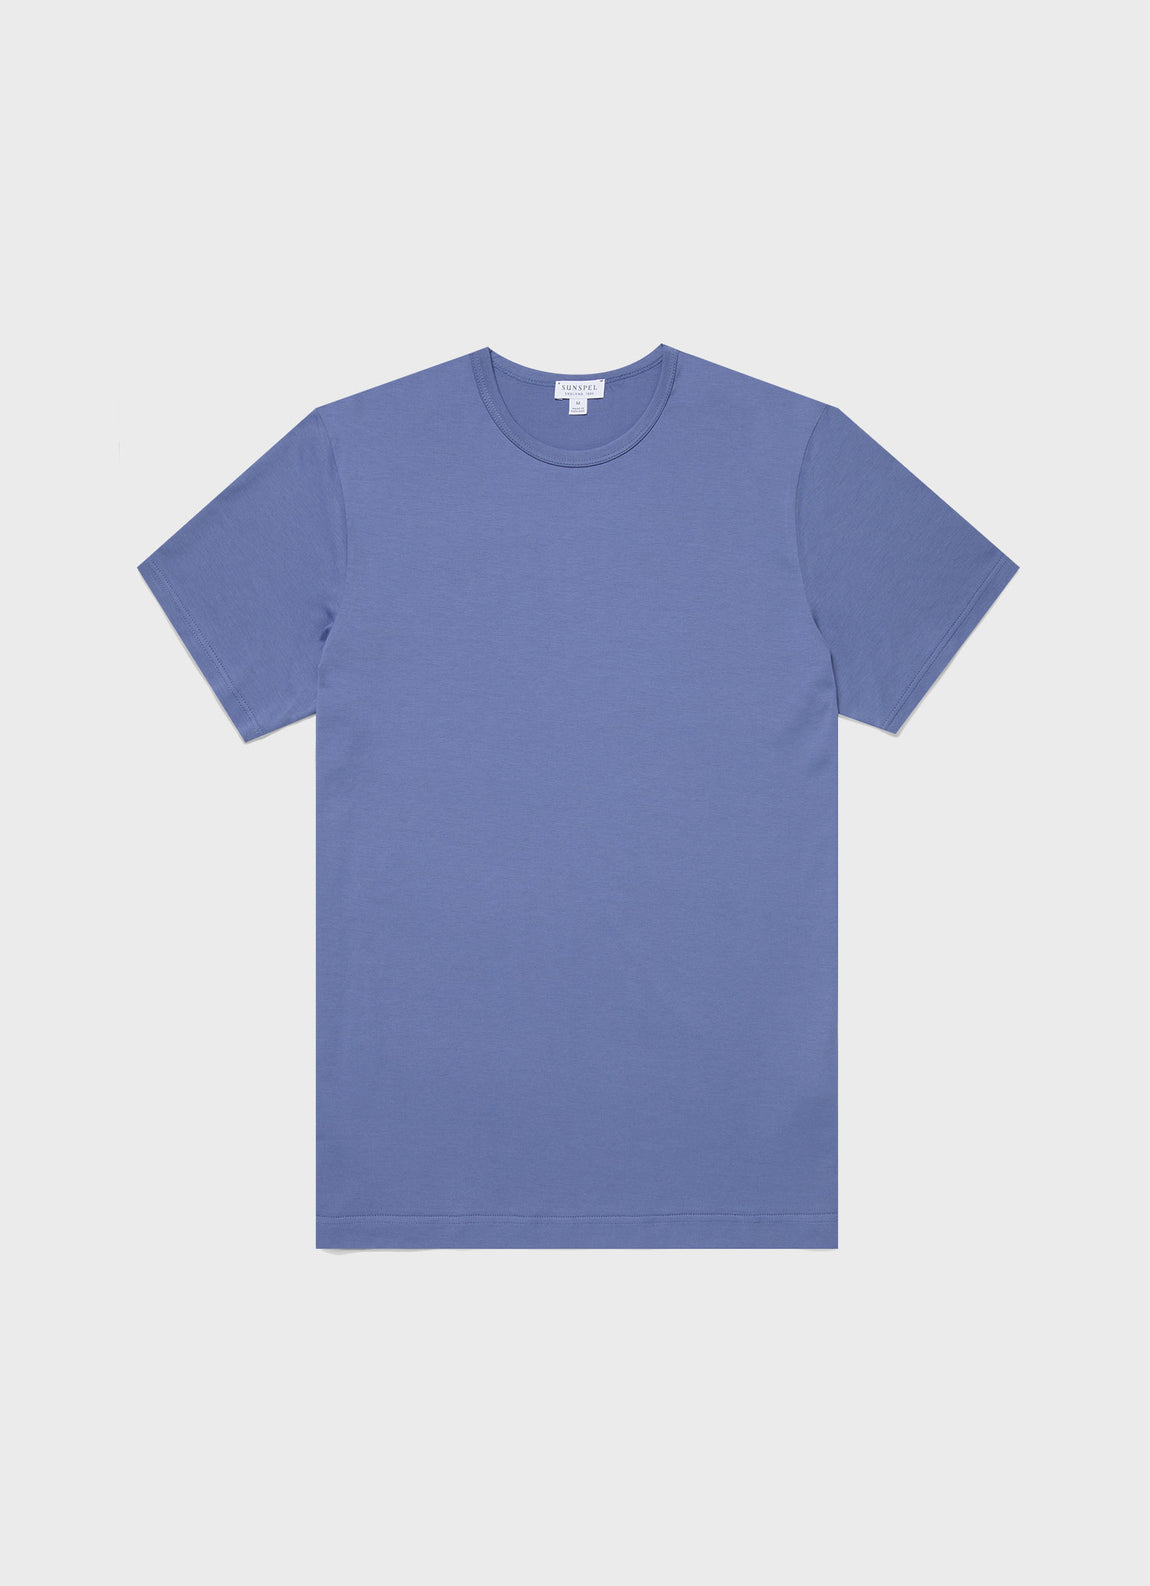 Men's Classic T-shirt in Grape